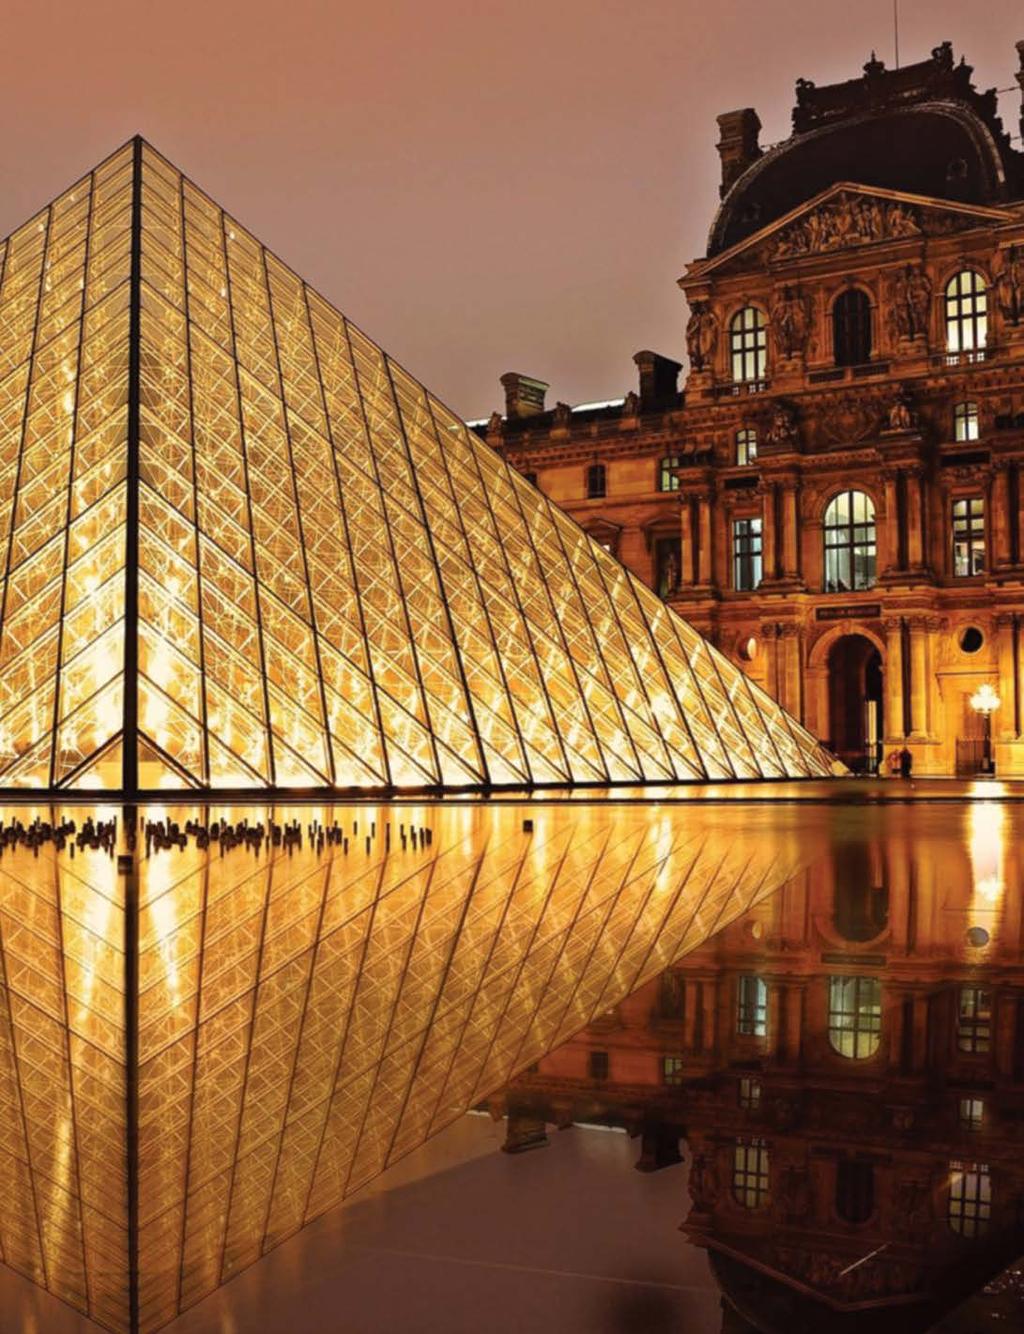 TOP paris 1 2 3 4 5 6 7 8 9 10 Λούβρο: το διασημότερο μουσείο του κόσμου! Για τους λάτρεις της μόδας, τα εμβληματικά εμπορικά κέντρα όπως τα Le Bon Marche, Colette και Galeries Lafayette!